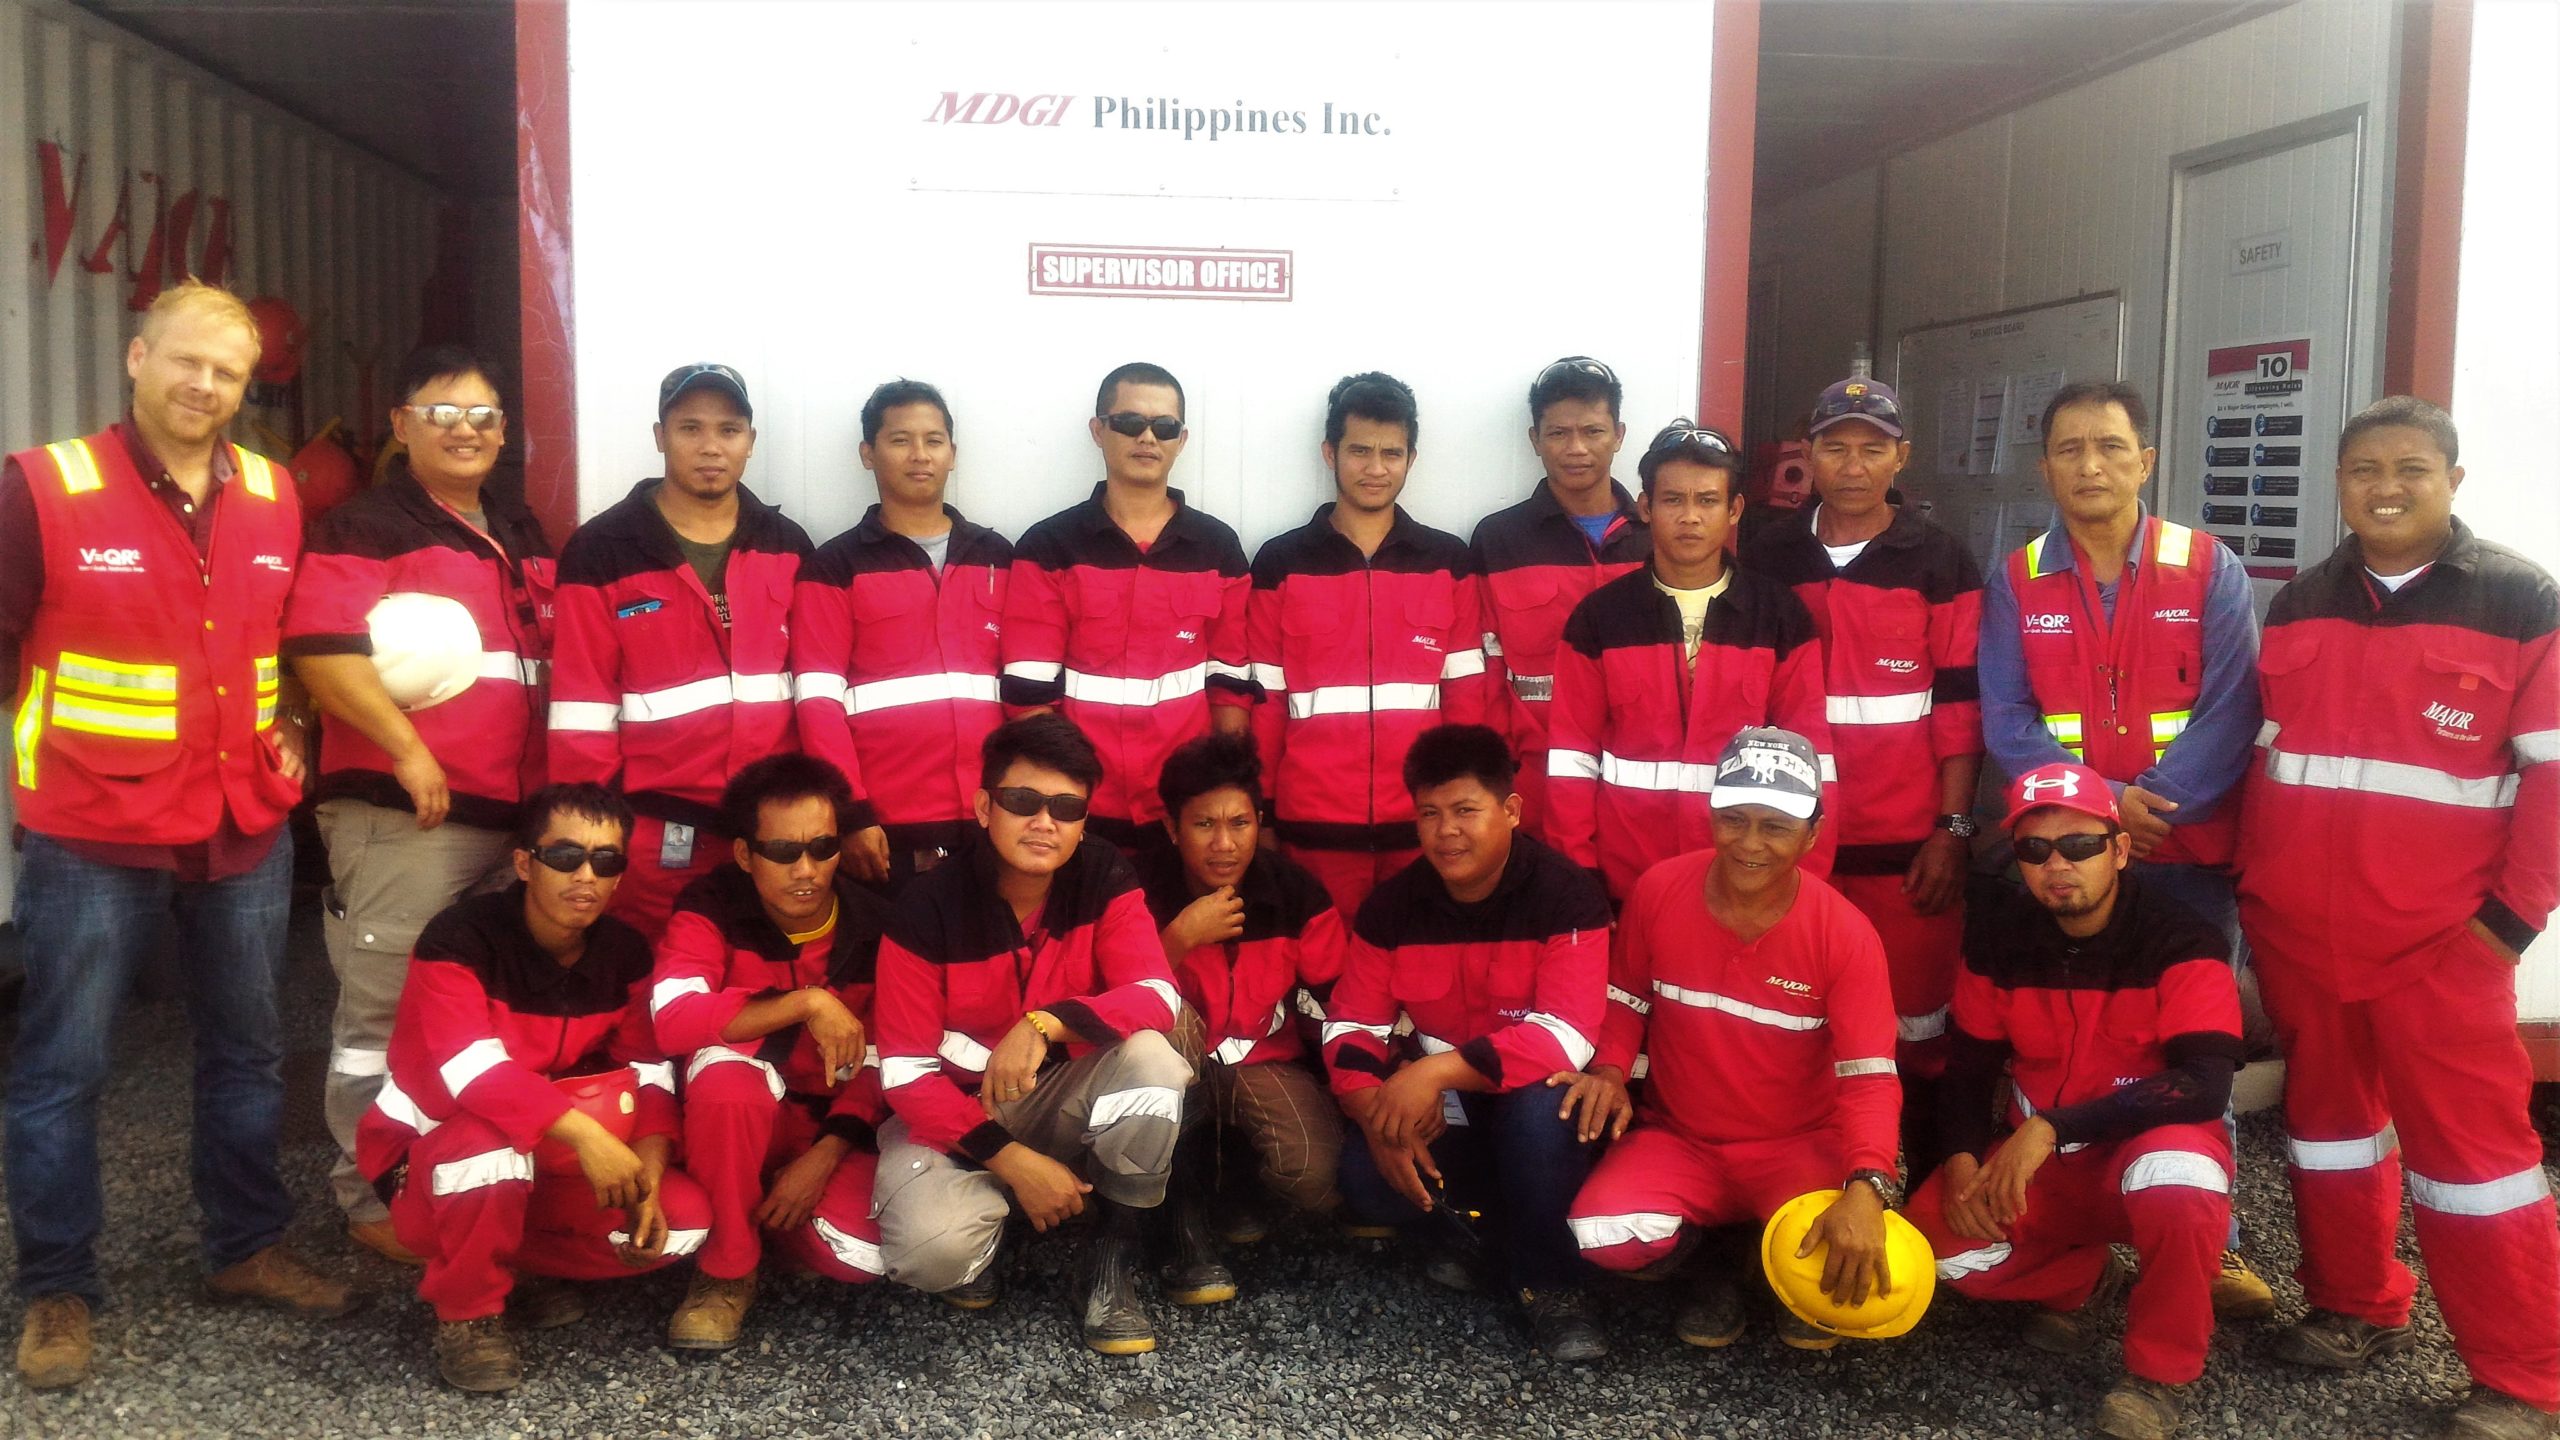 Major Drilling Philippines